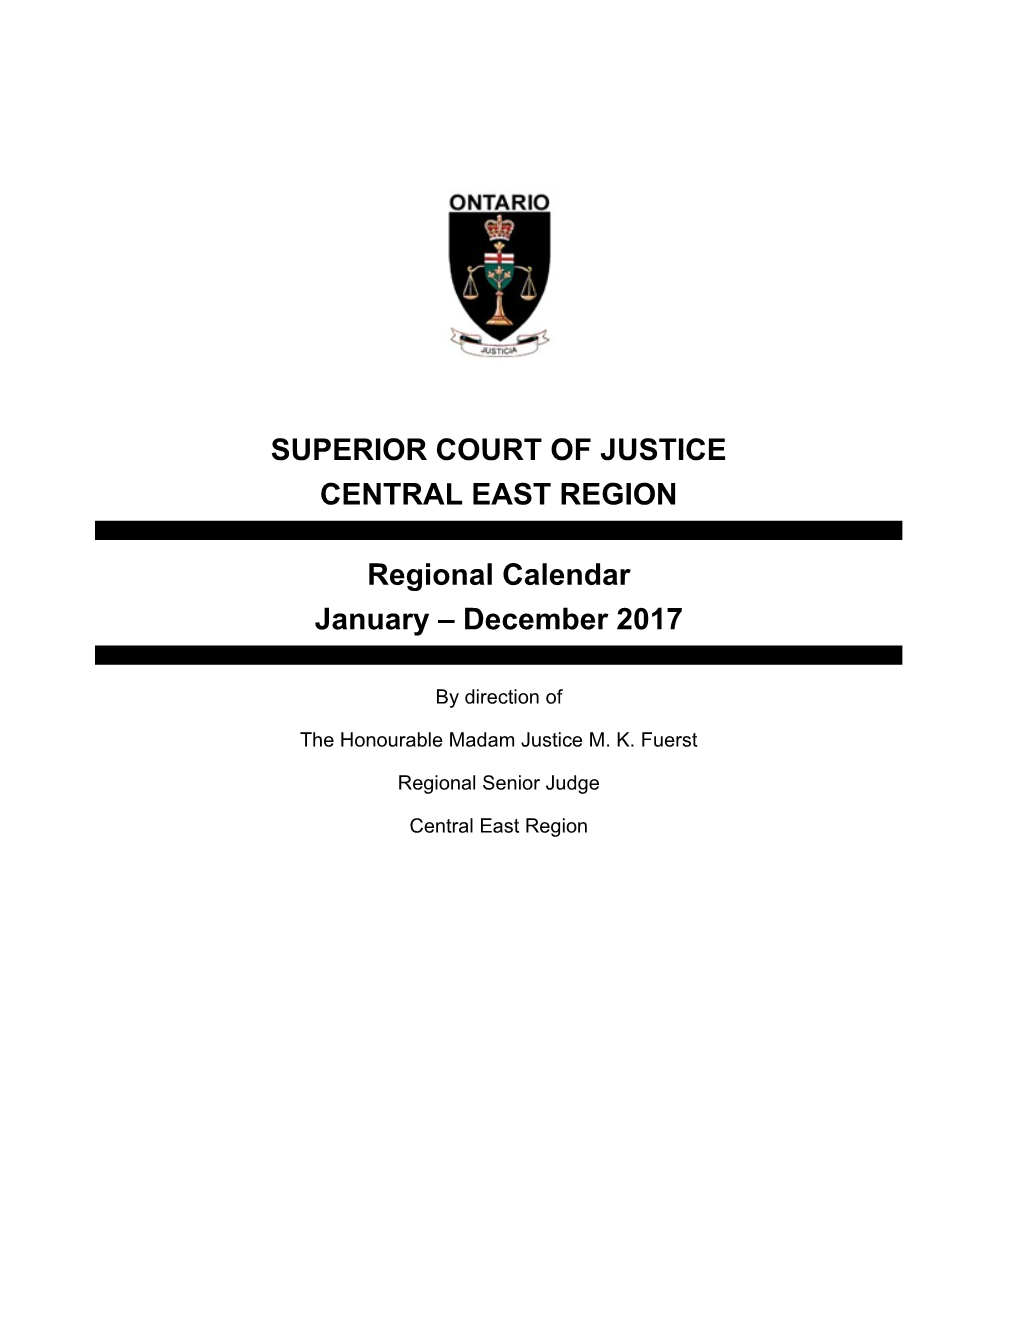 Central East Regional Calendar - January to December 2017